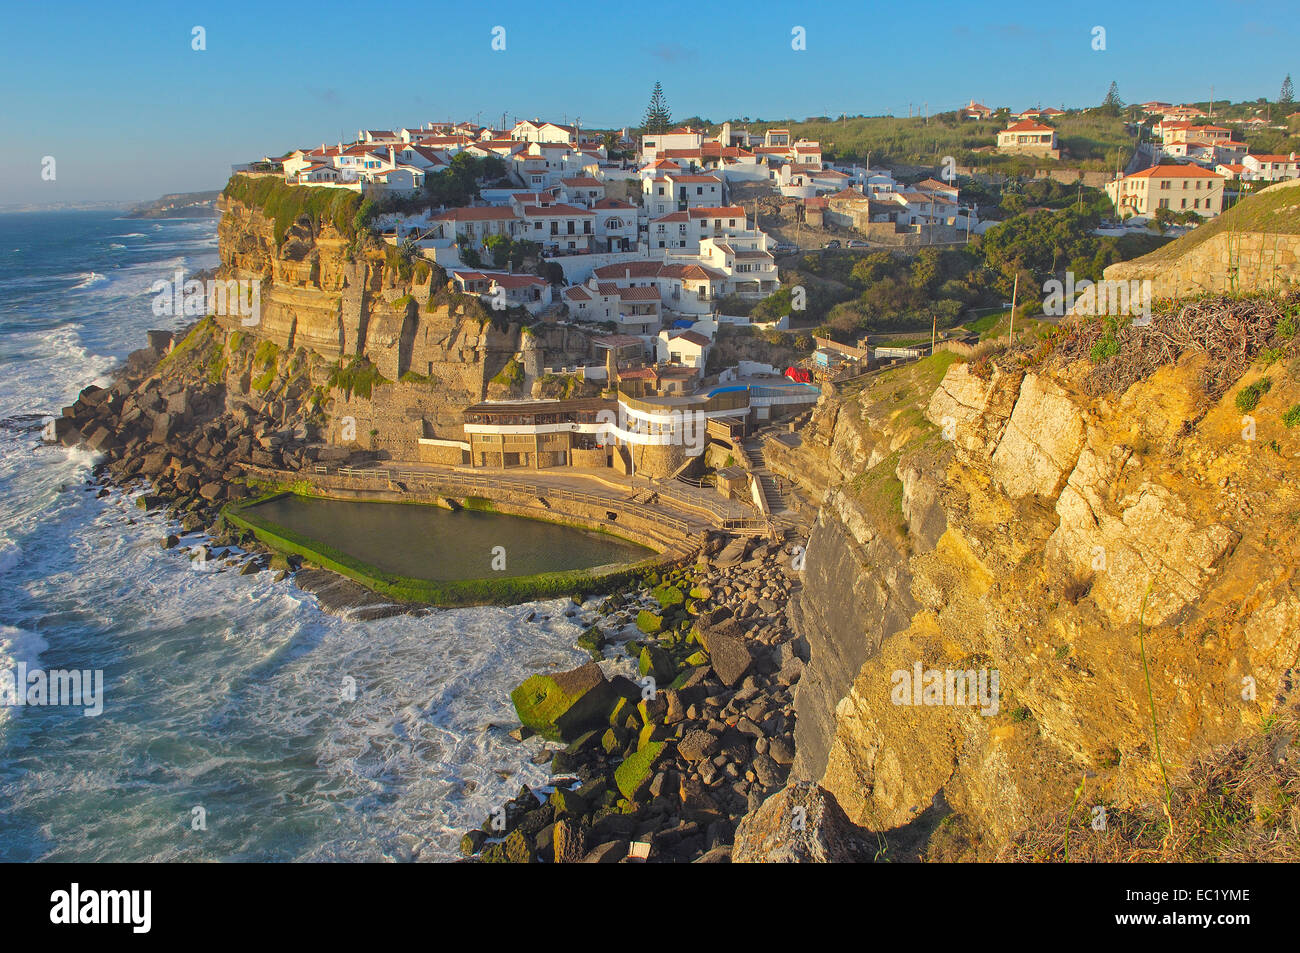 Azenhas do Mar, Lisbon district, Sintra coast, Portugal, Europe Stock Photo